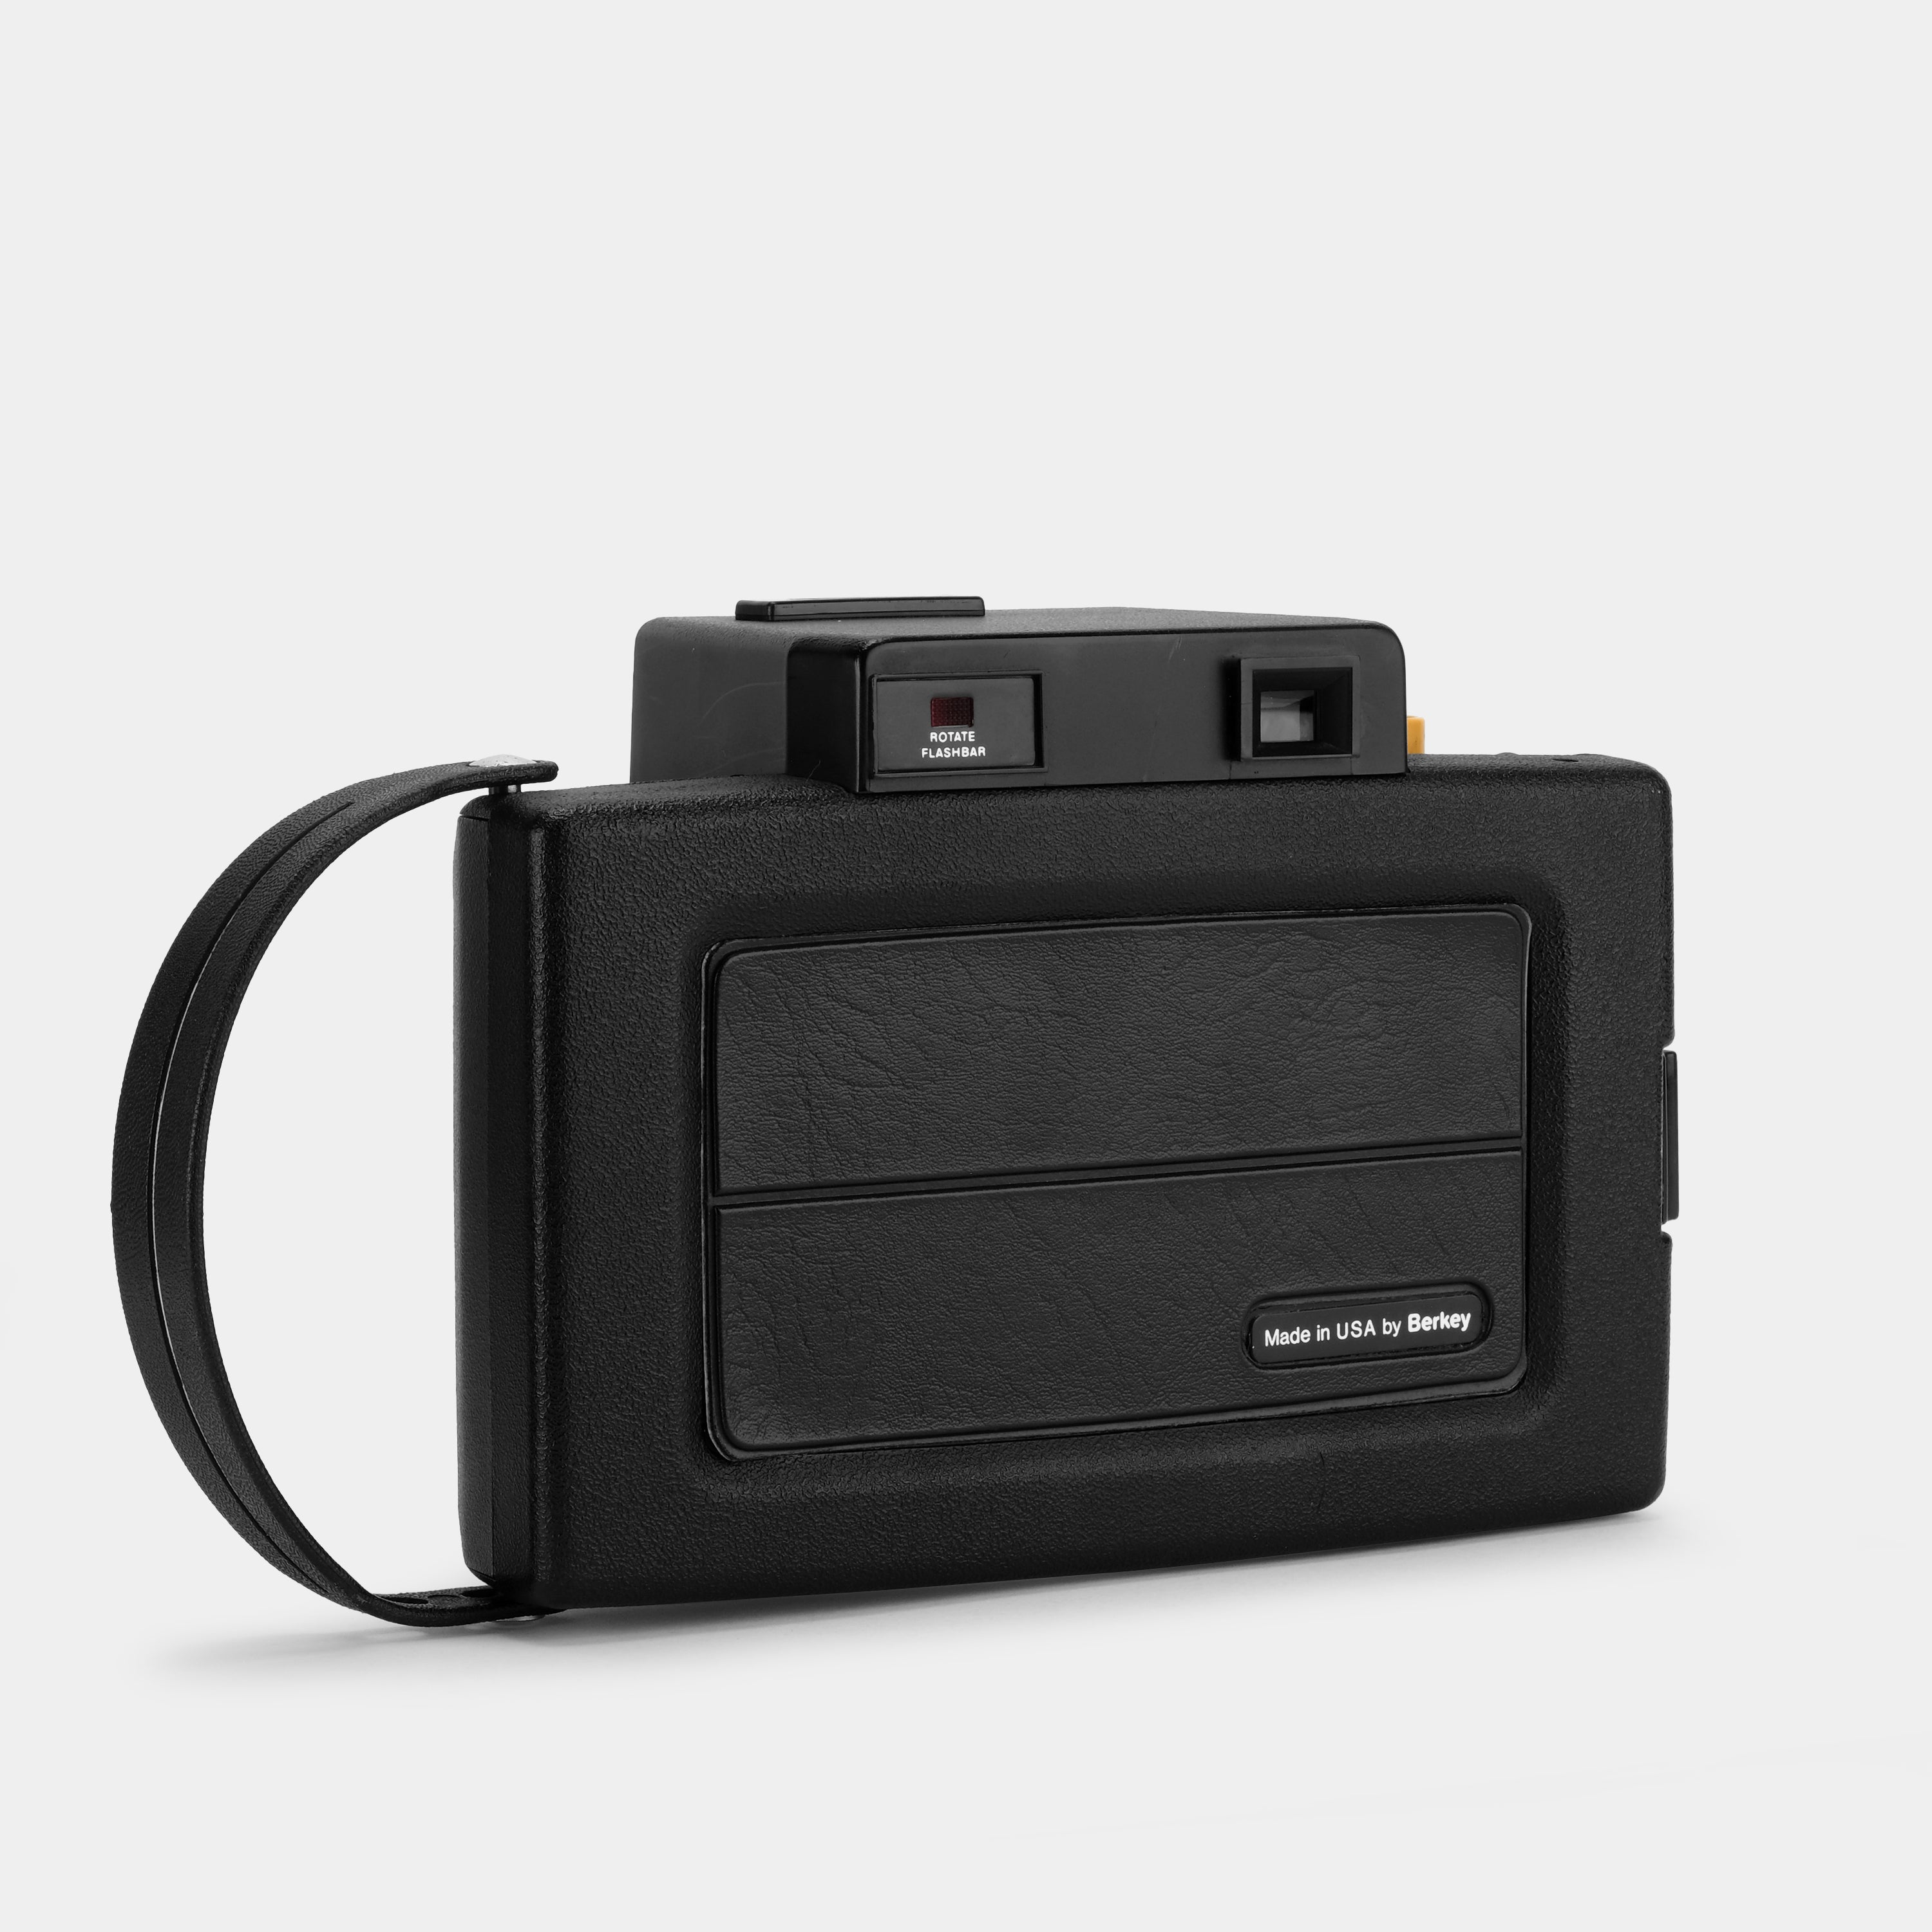 Keystone Rapid-Shot 750 Packfilm Camera